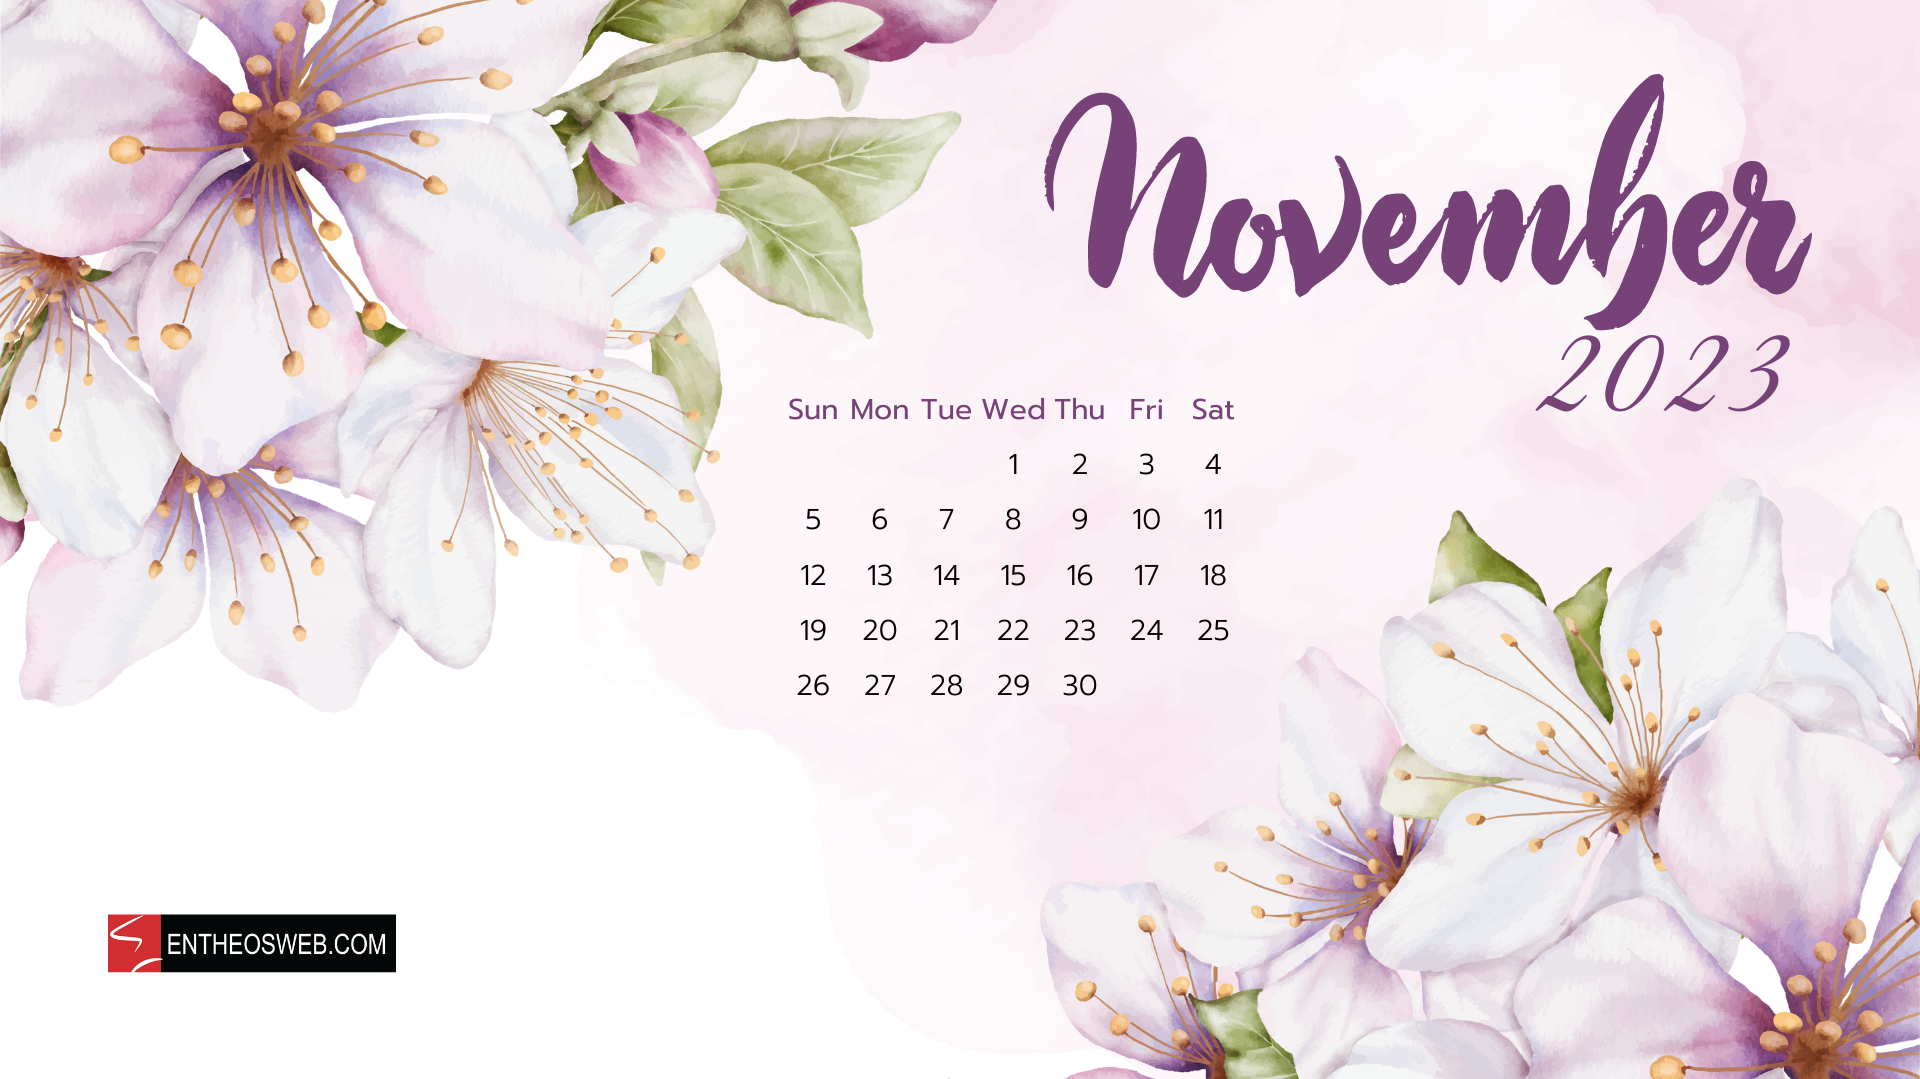 🔥 Download November Calendar Desktop Wallpaper Entheosweb by